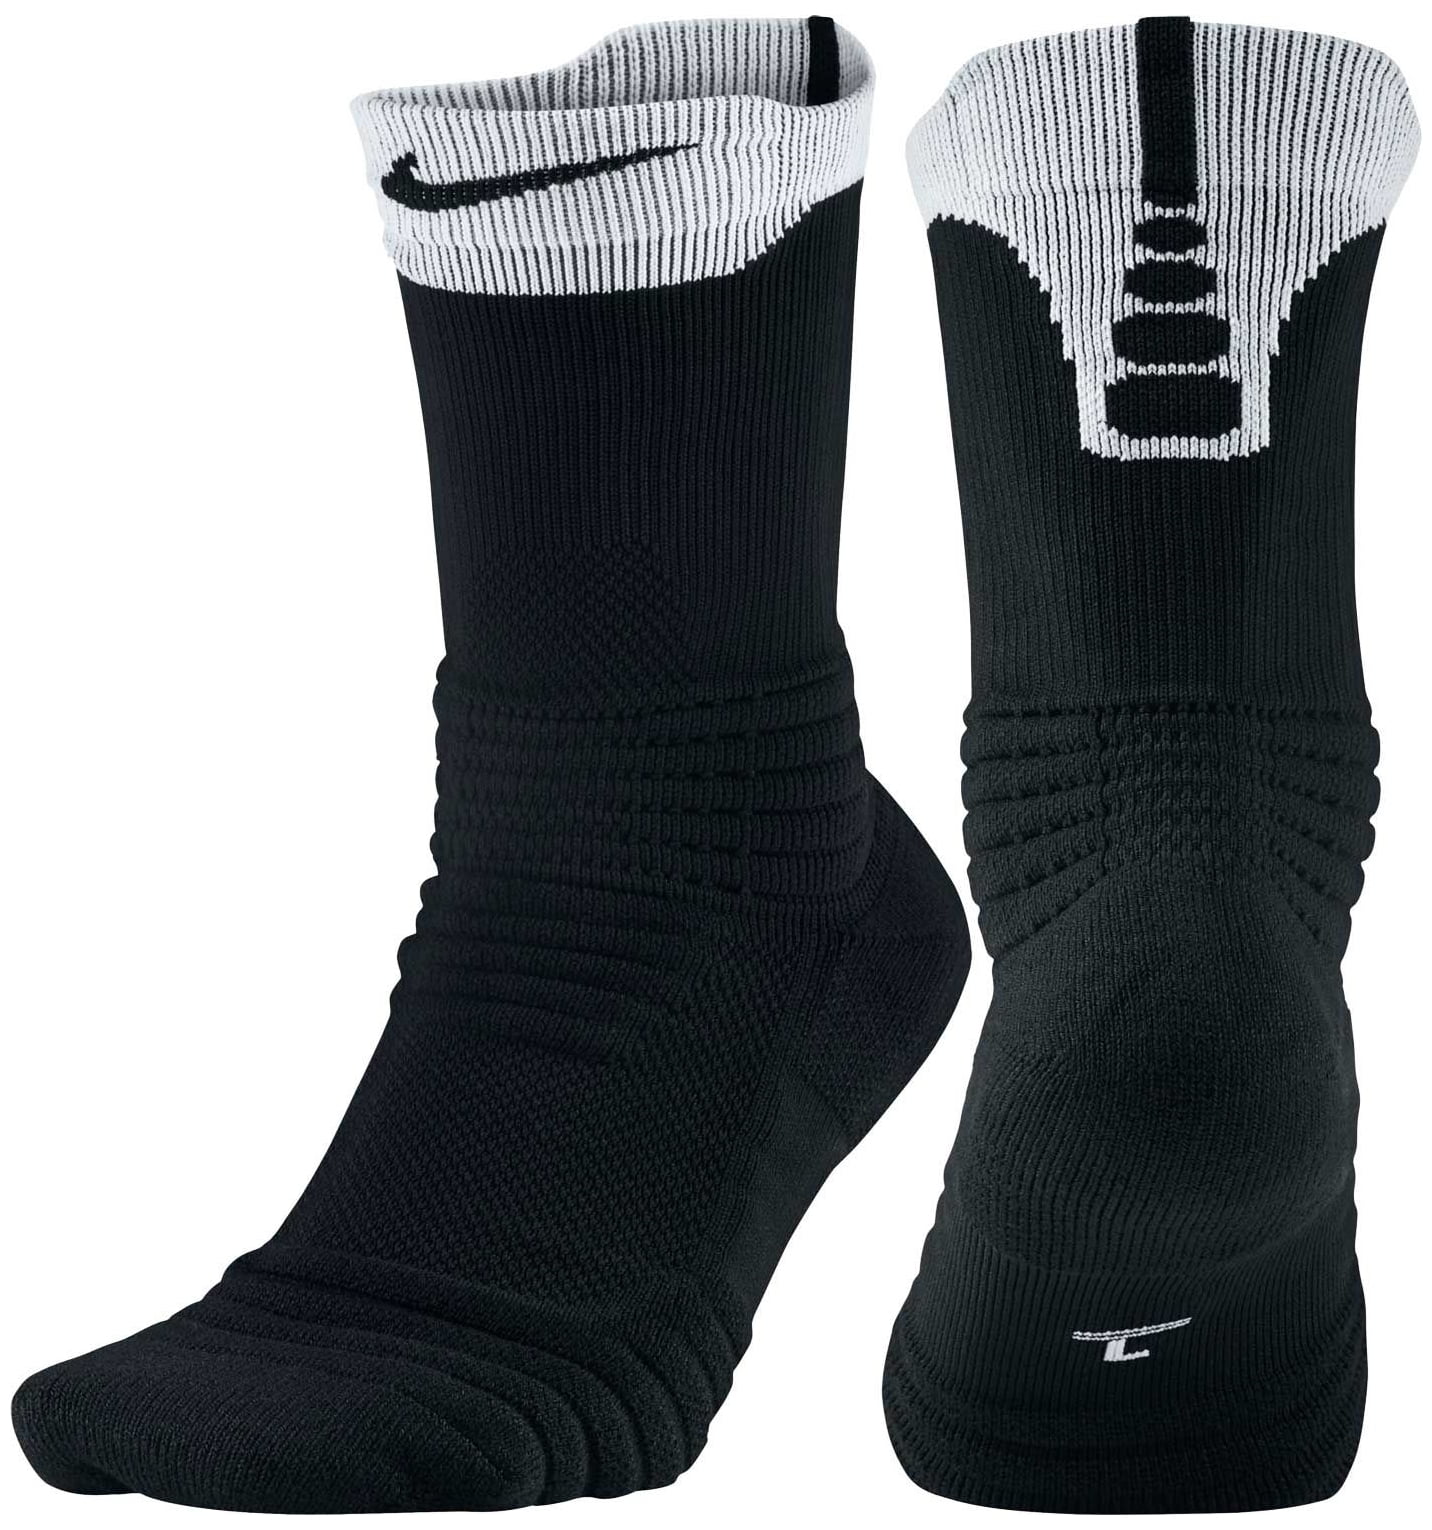 gans diep Harmonie Nike Elite Versatility Crew Basketball Socks - Black/White/Black - S -  Walmart.com